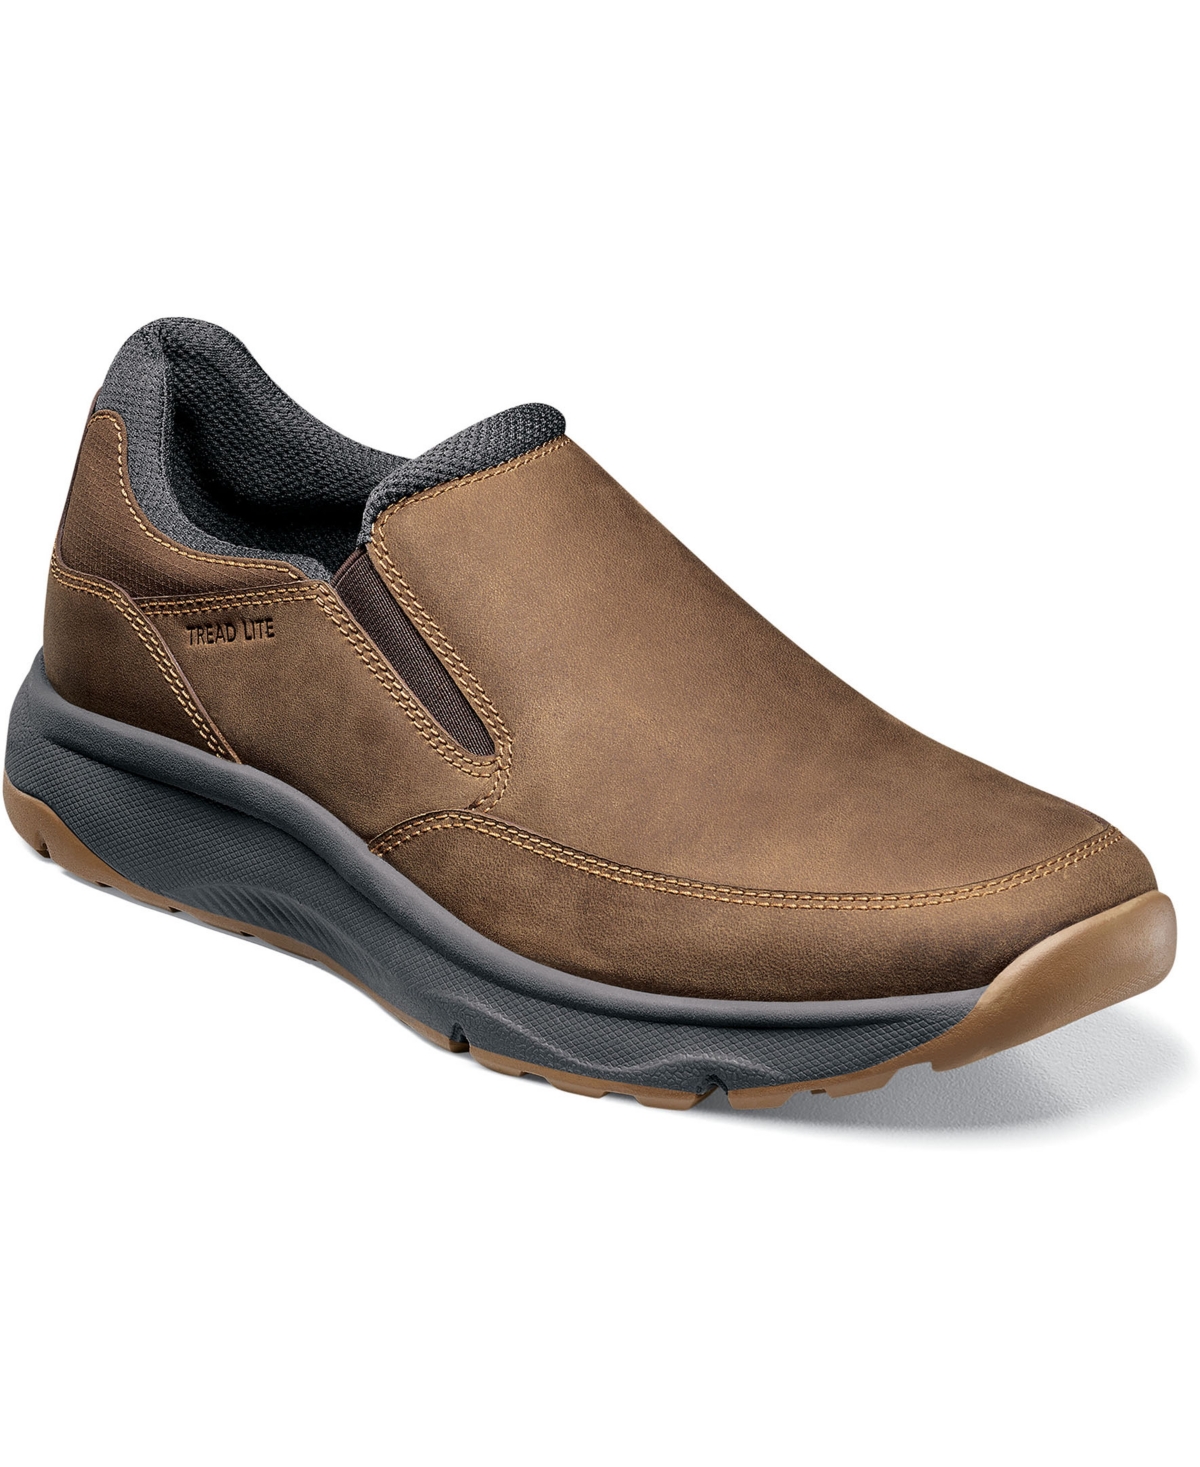 Florsheim Men's Tread Lite Moc Toe Slip-on Shoes In Brown